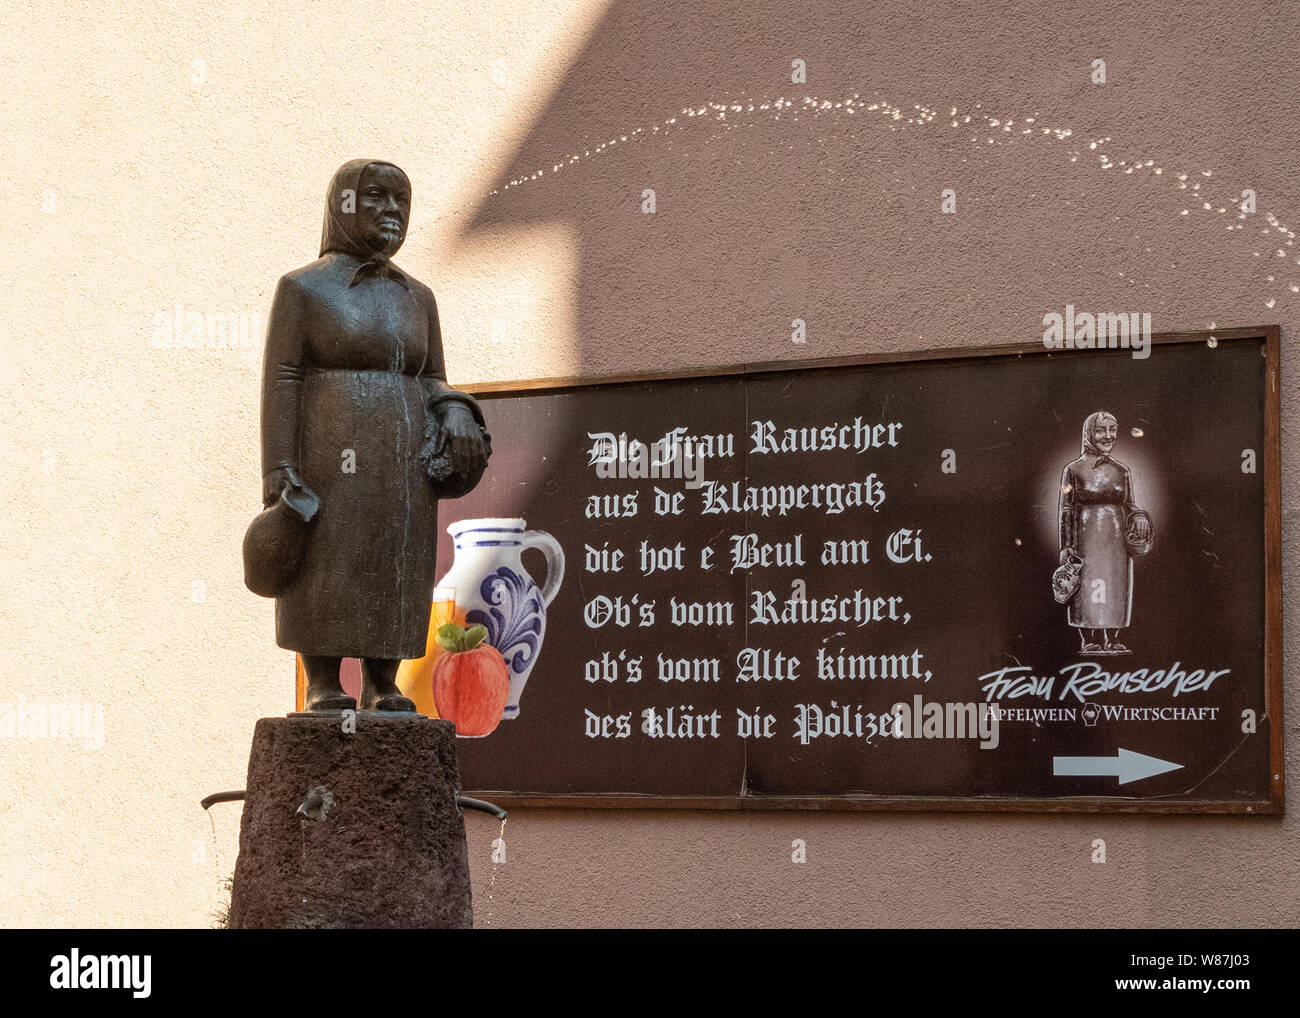 Frau Rauscher Fountain of a legendary apple wine spitting thief - Old Sachsenhausen, Frankfurt, Germany Stock Photo